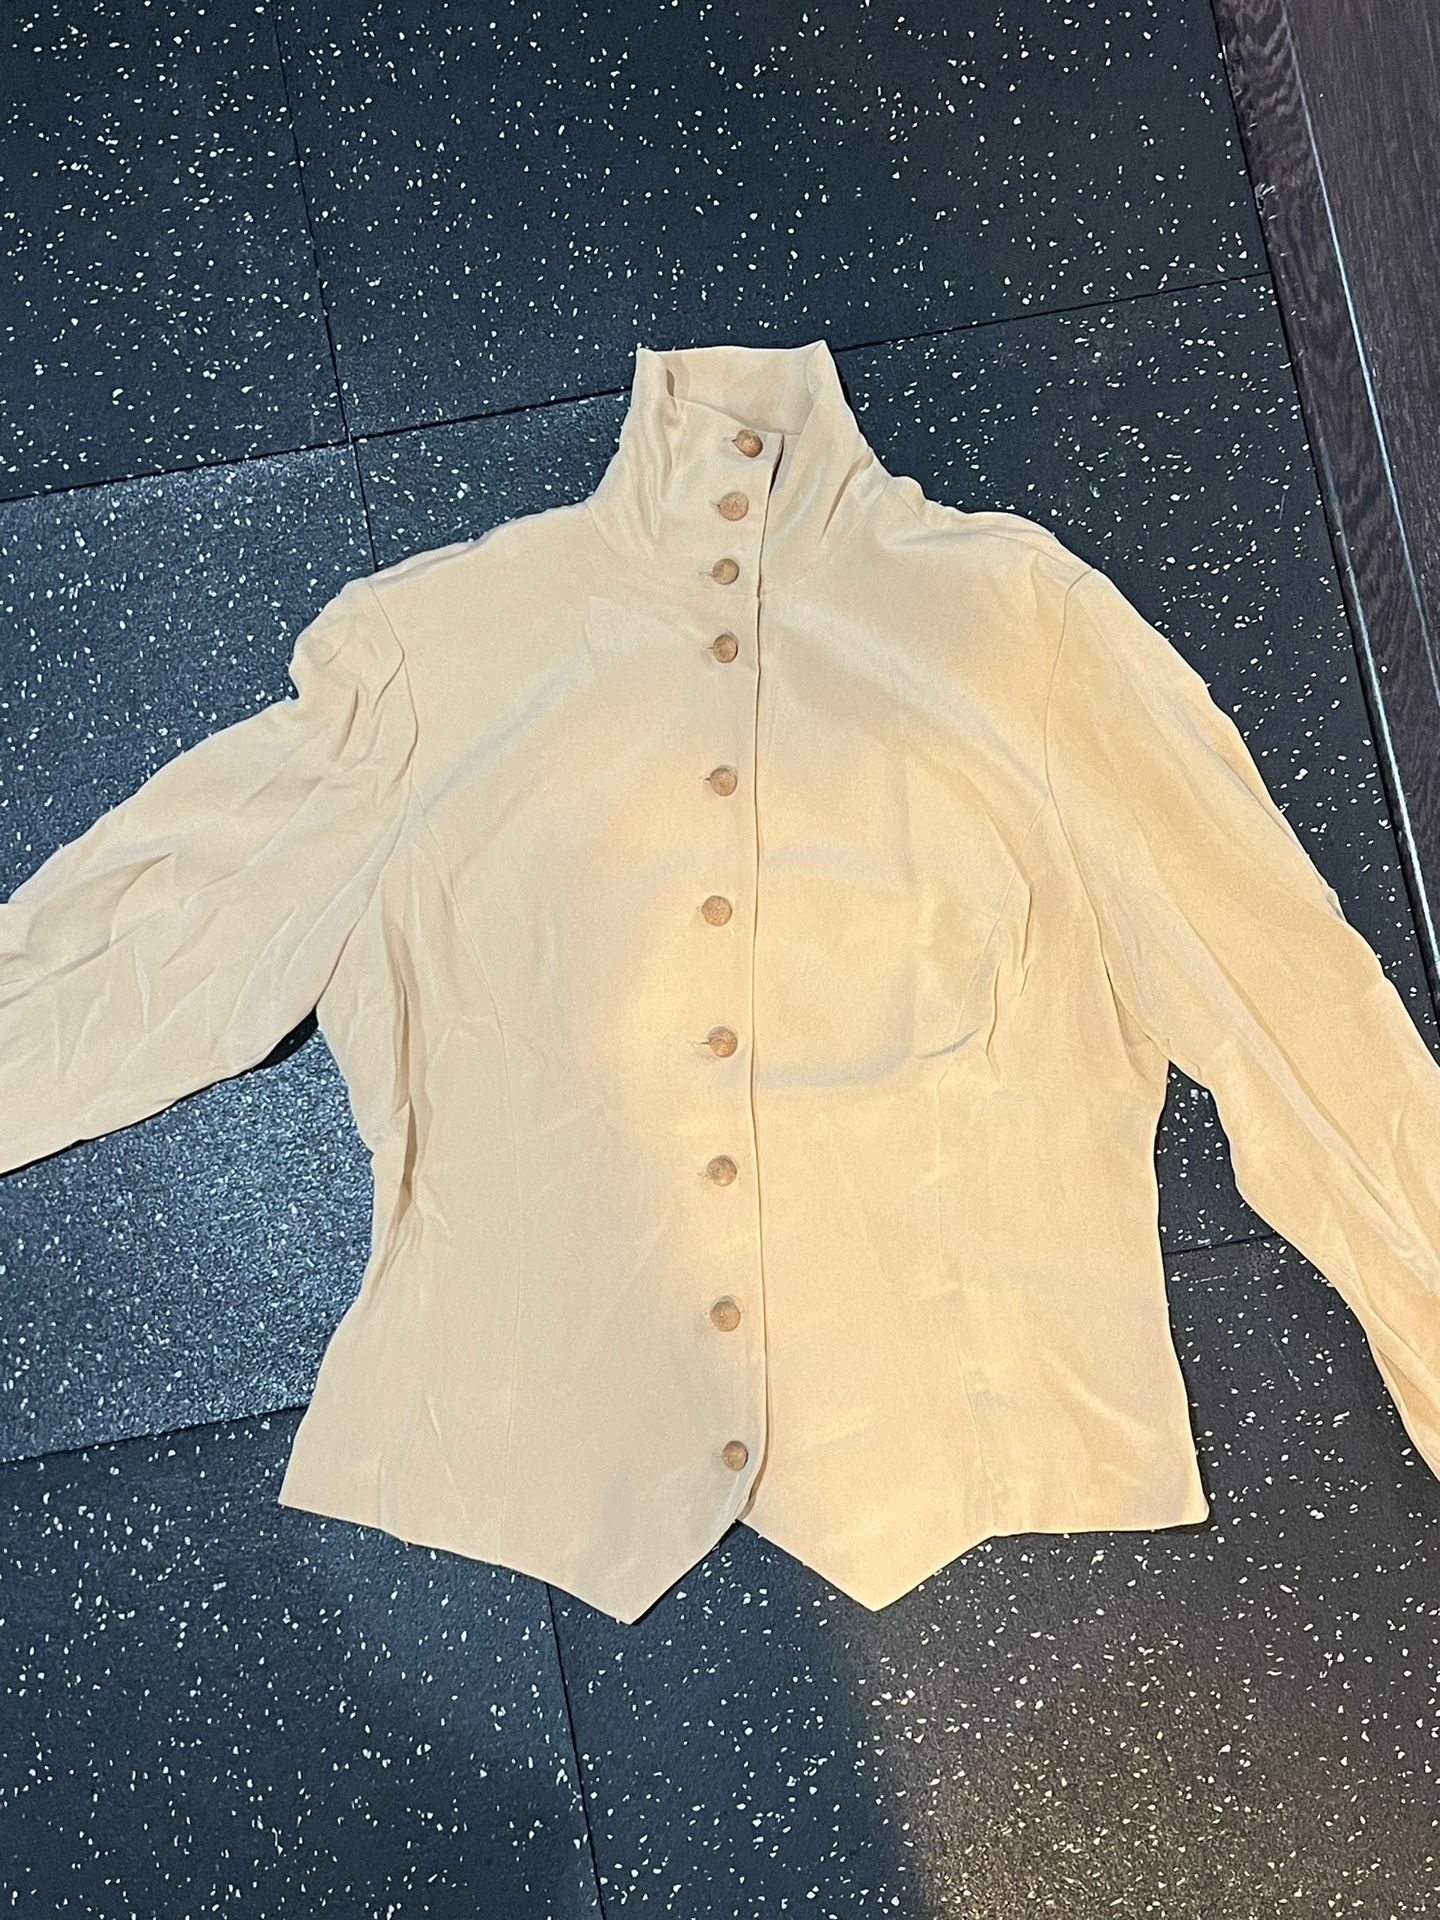 Dana Buchman Women’s 100 % Silk Small Top Long Sleeve shirt Button up